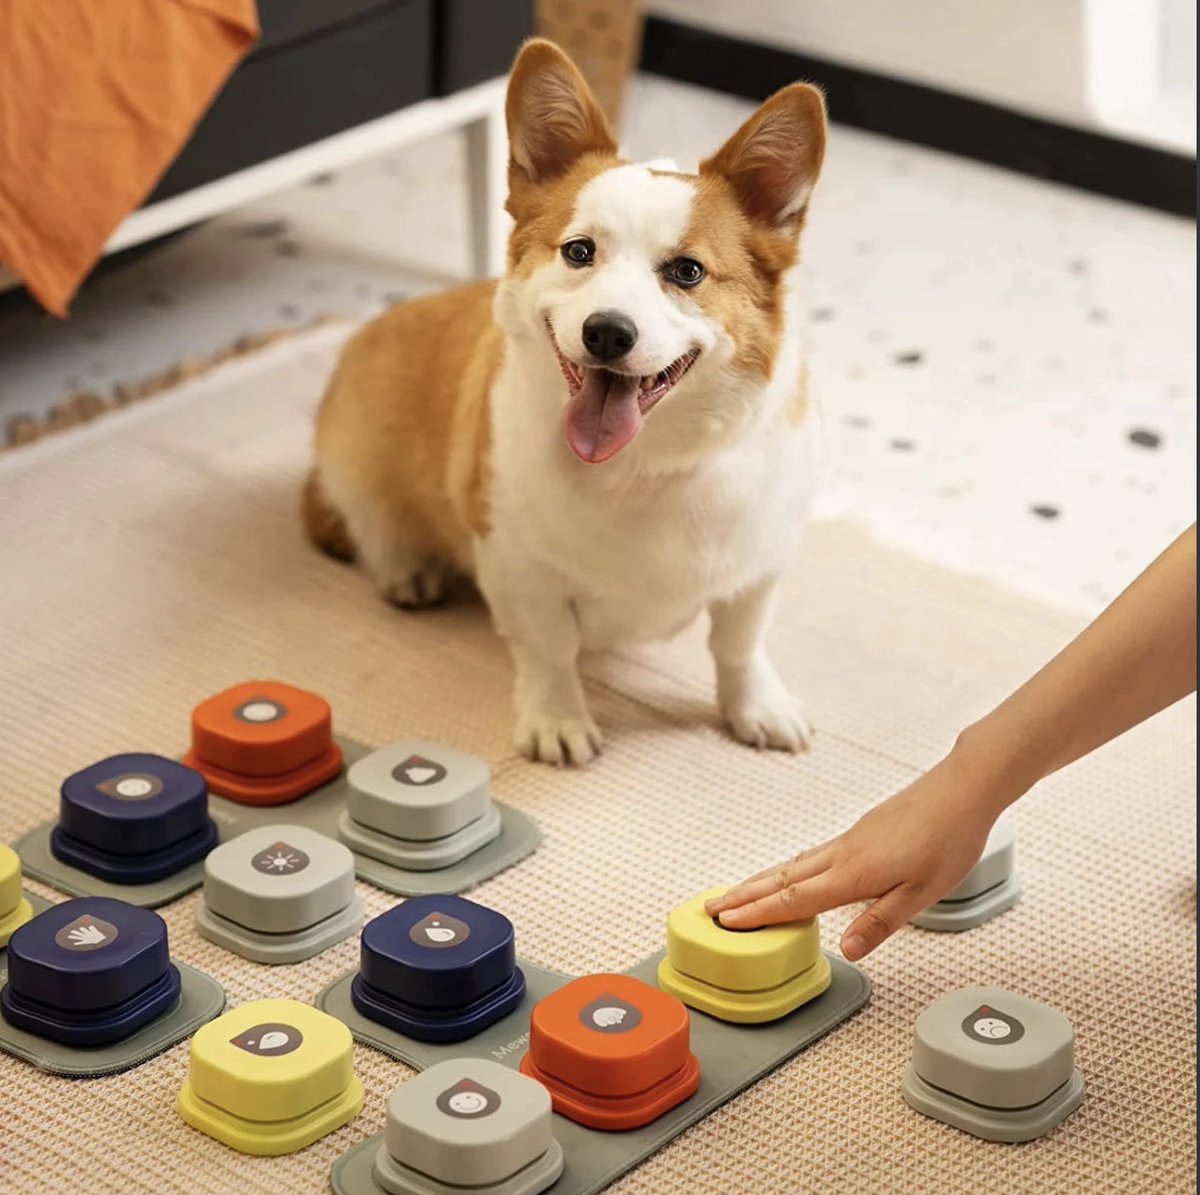 Interactive Pet Communication Training Buttons
bestpetsco.com/product/intera…
#pettalk #petcommunication #dogcommunication #dogtalk #dogplay